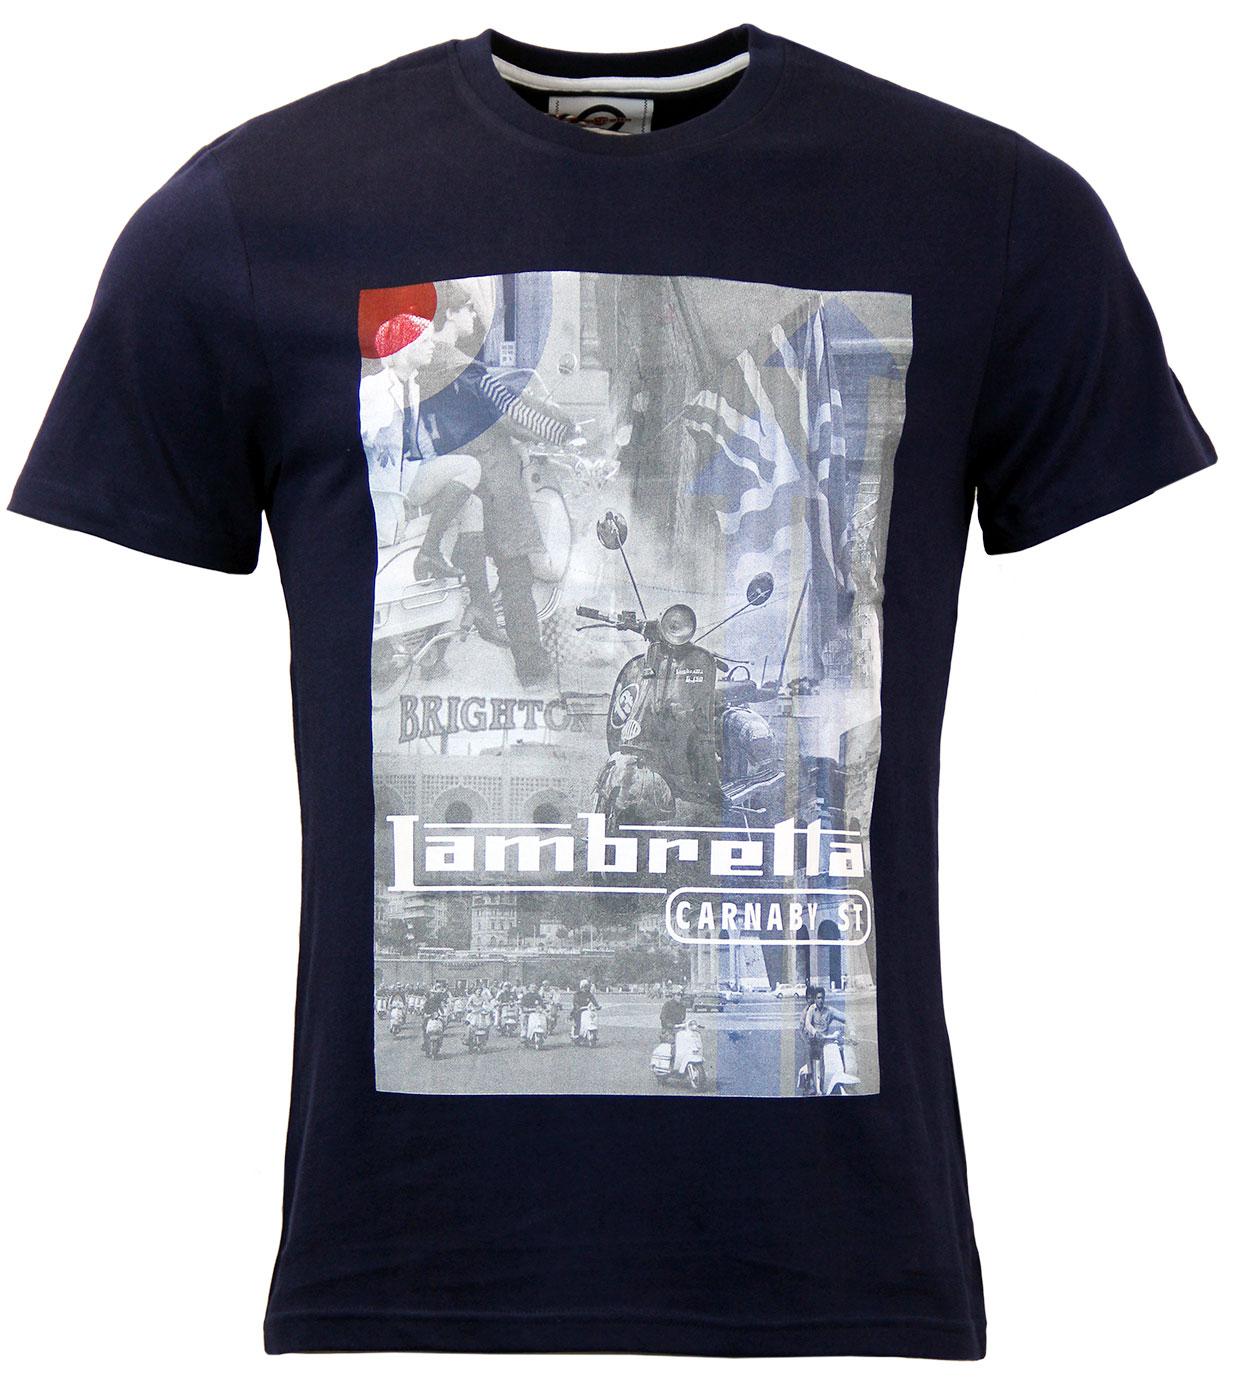 LAMBRETTA Mod Carnaby St Photo Print T-Shirt